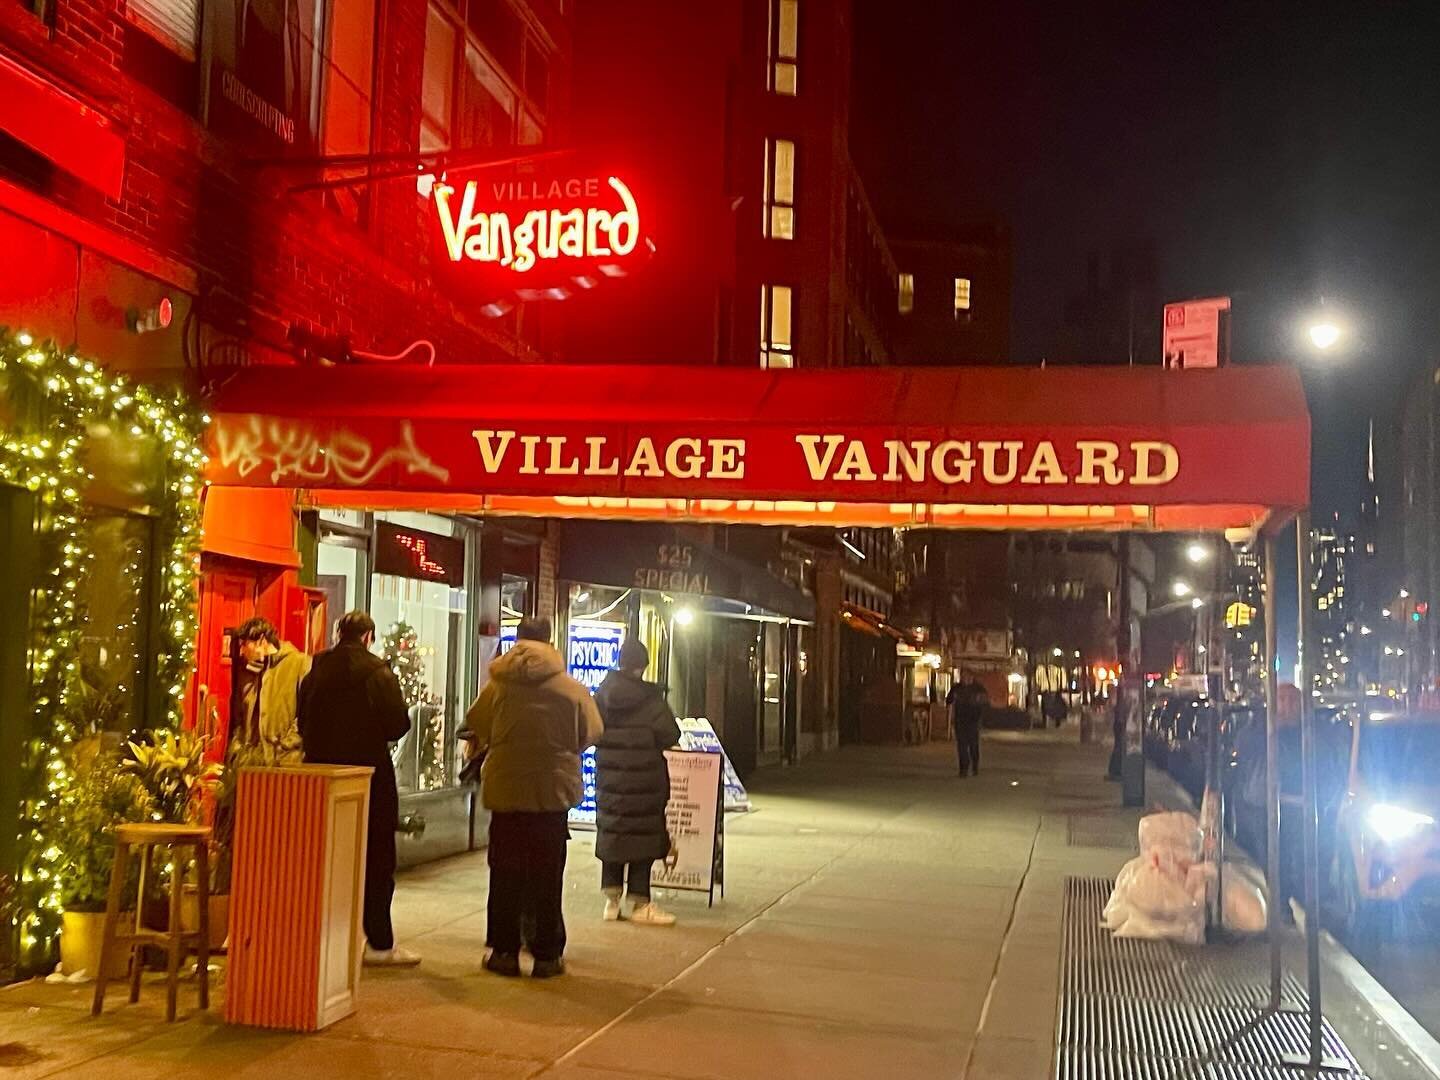 Vanguard tonight!!
&bull;
&bull;
#vanguardjazzorchestra #livemusic #nycjazz #thadjones #mellewis #jazzorchestra #mondaynightinthevillage #jeffnelsontrb